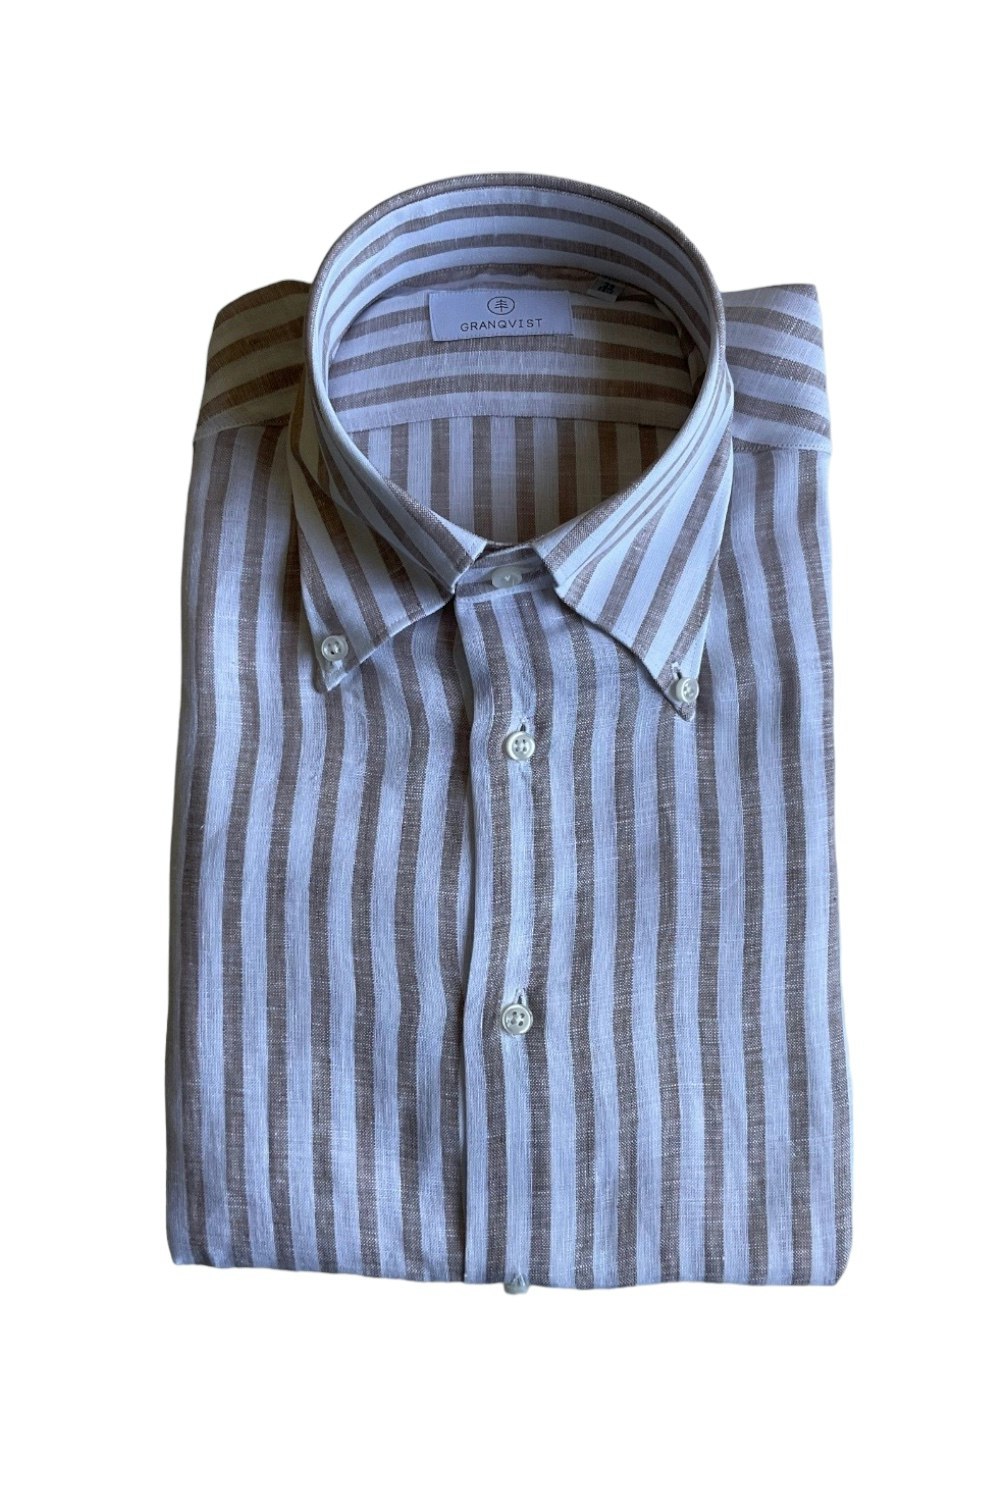 Bengal Stripe Linen Shirt - Button Down - Light Brown/White